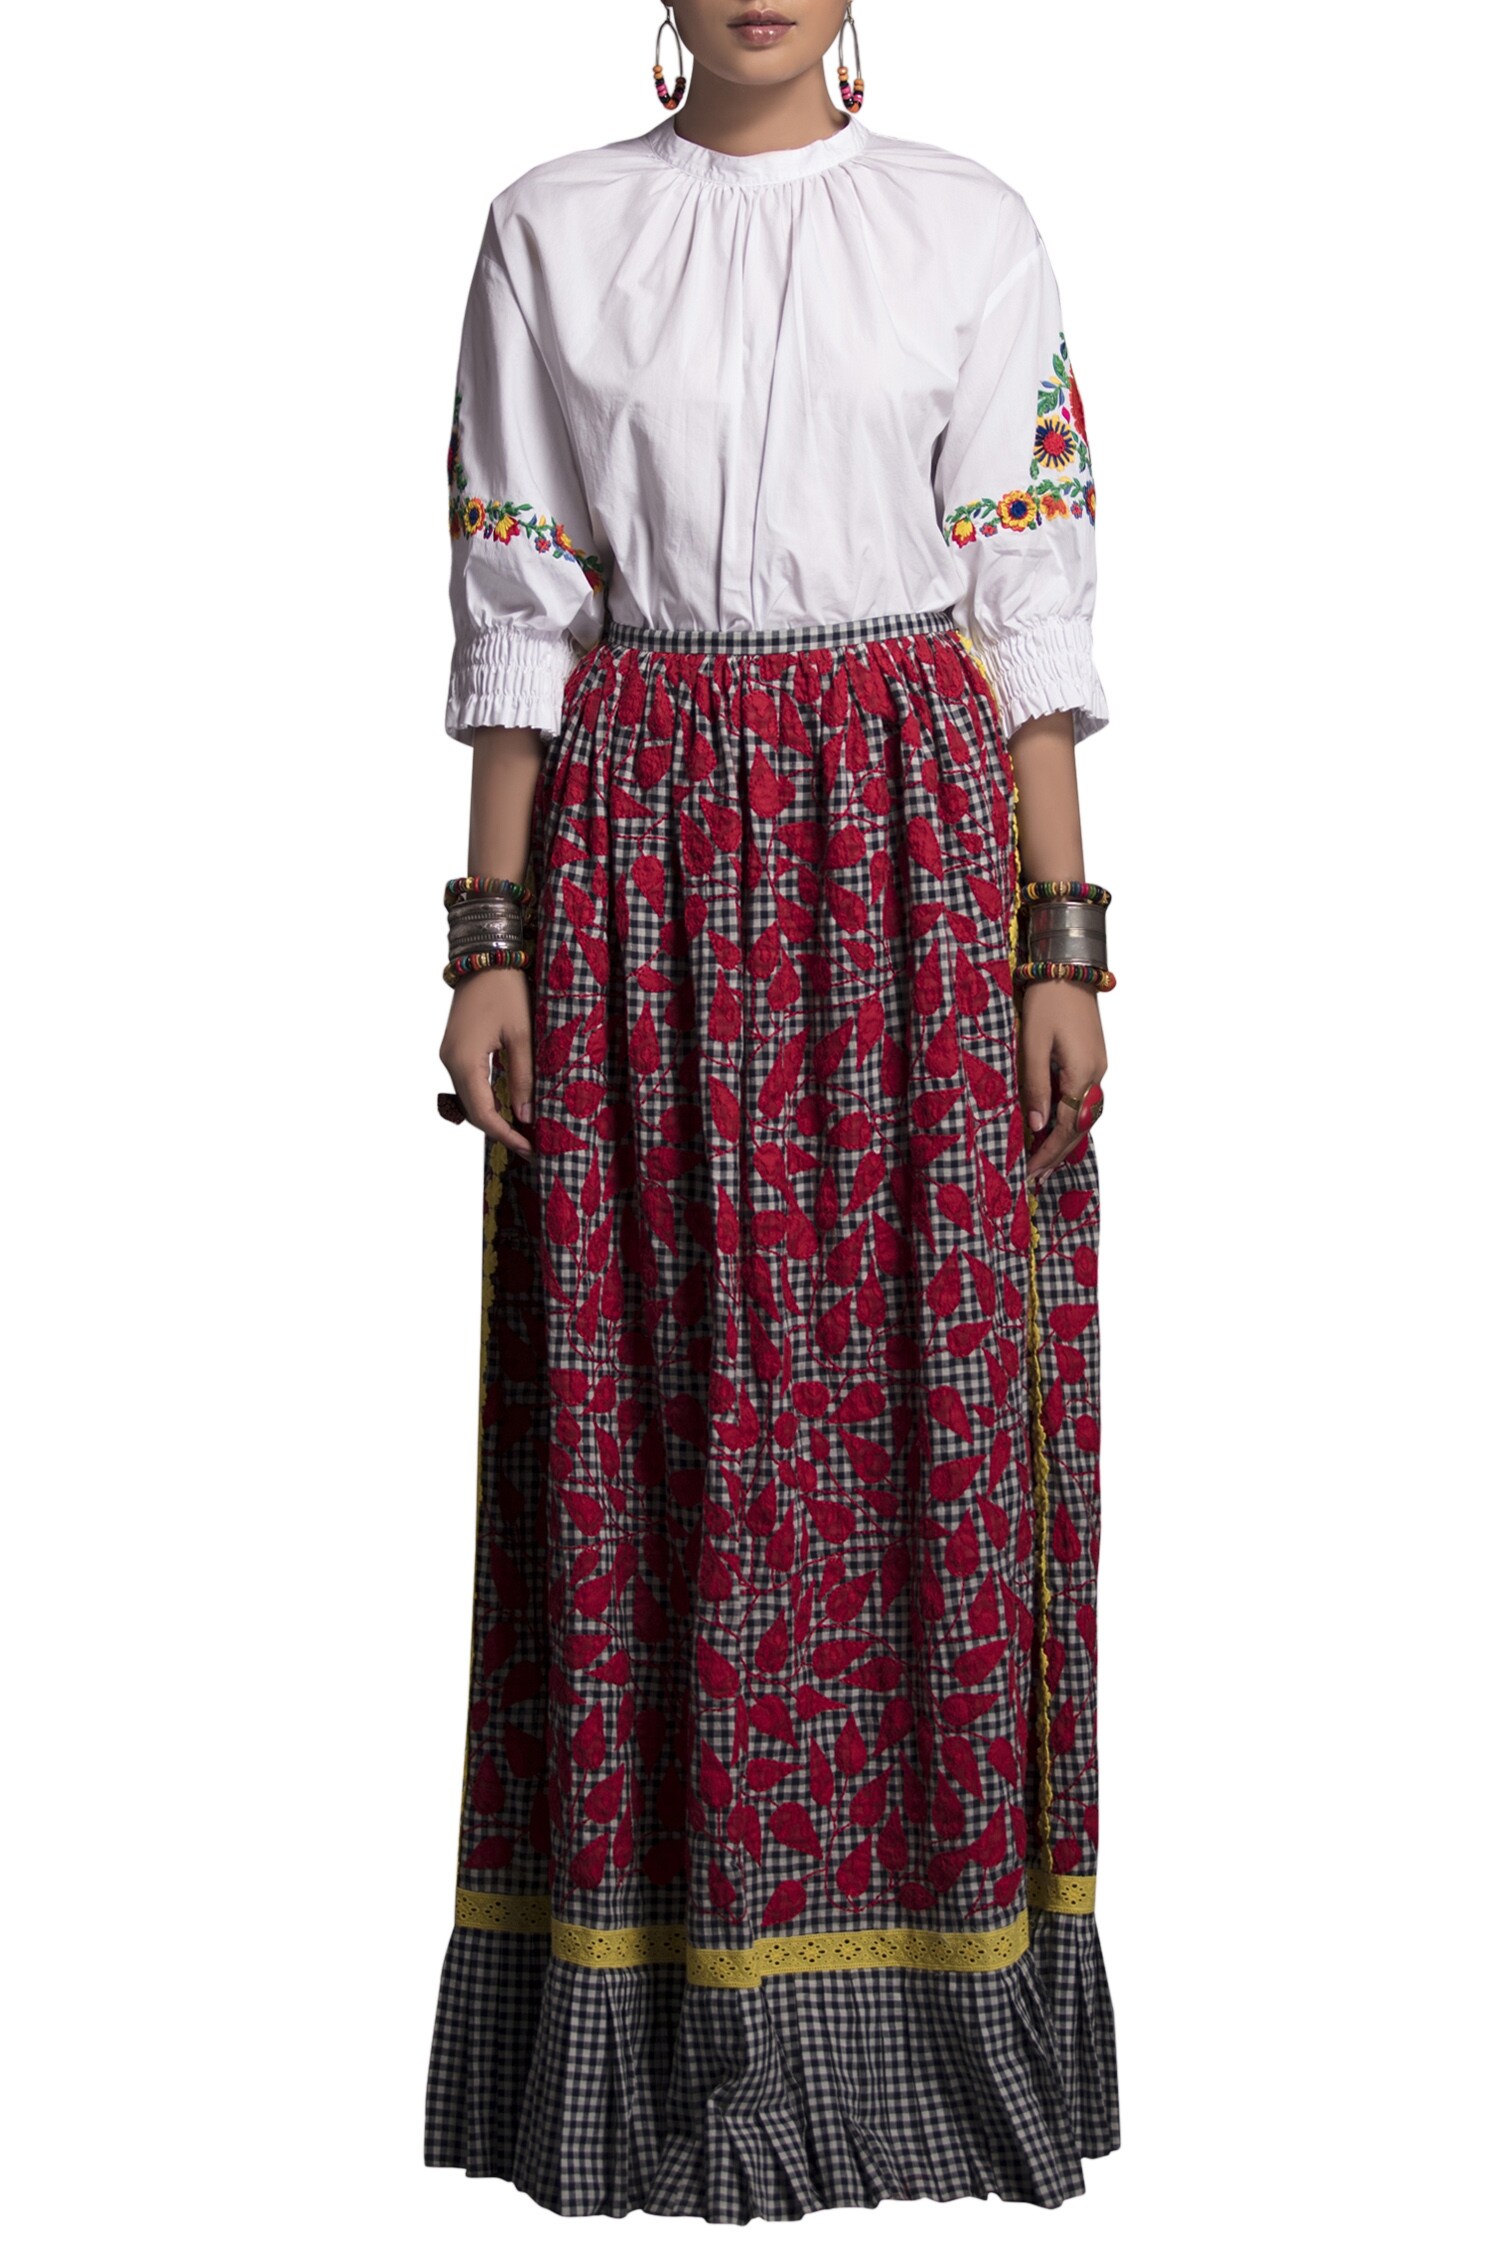 Payal Jain White Cotton Embroidered Gingham Checks Round Neck Applique Skirt Set For Women